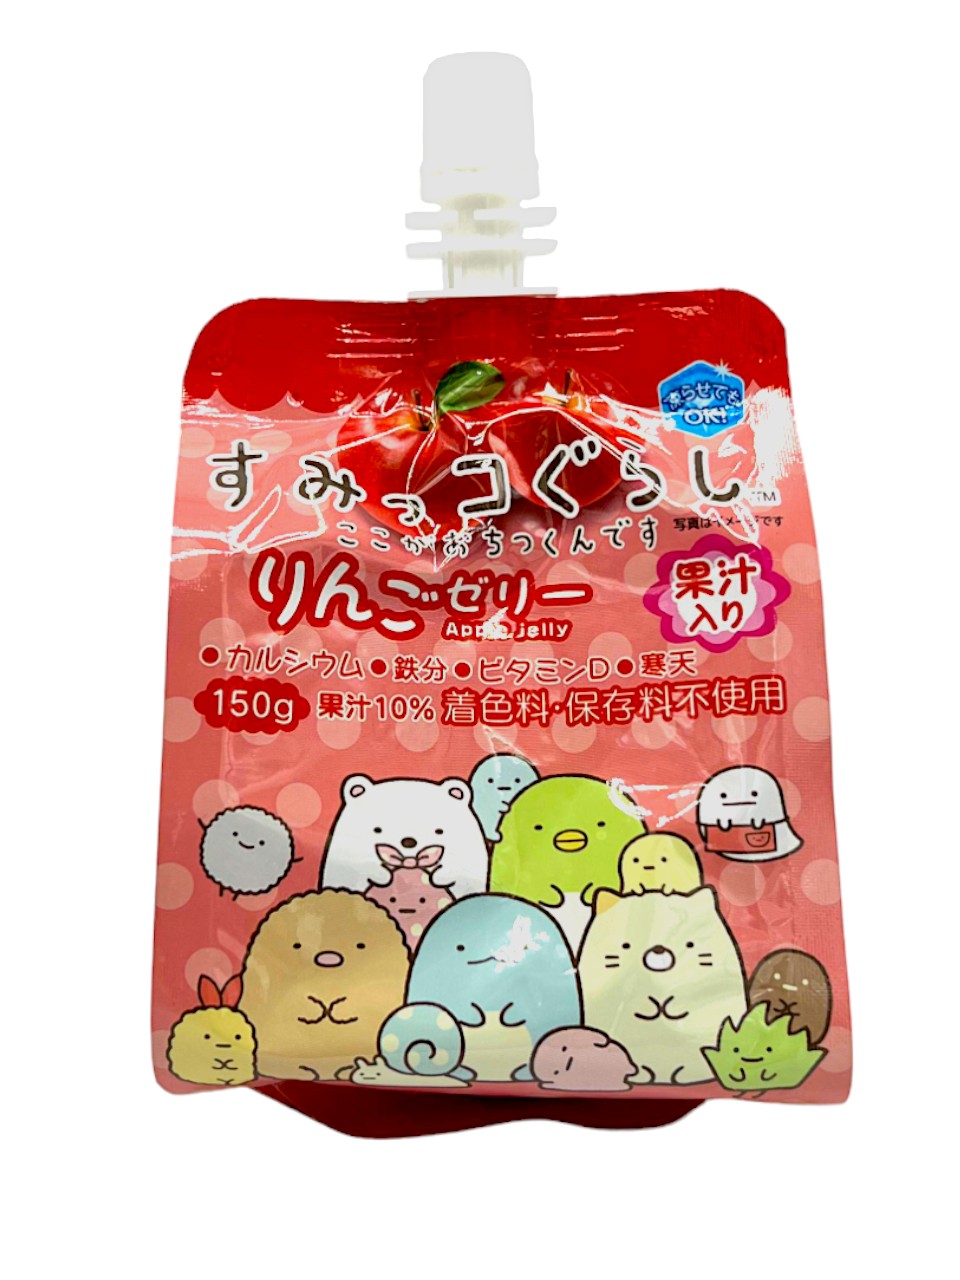 Yokoo Sumikko Gurashi Apple Jelly Pack of 6 (Japan)